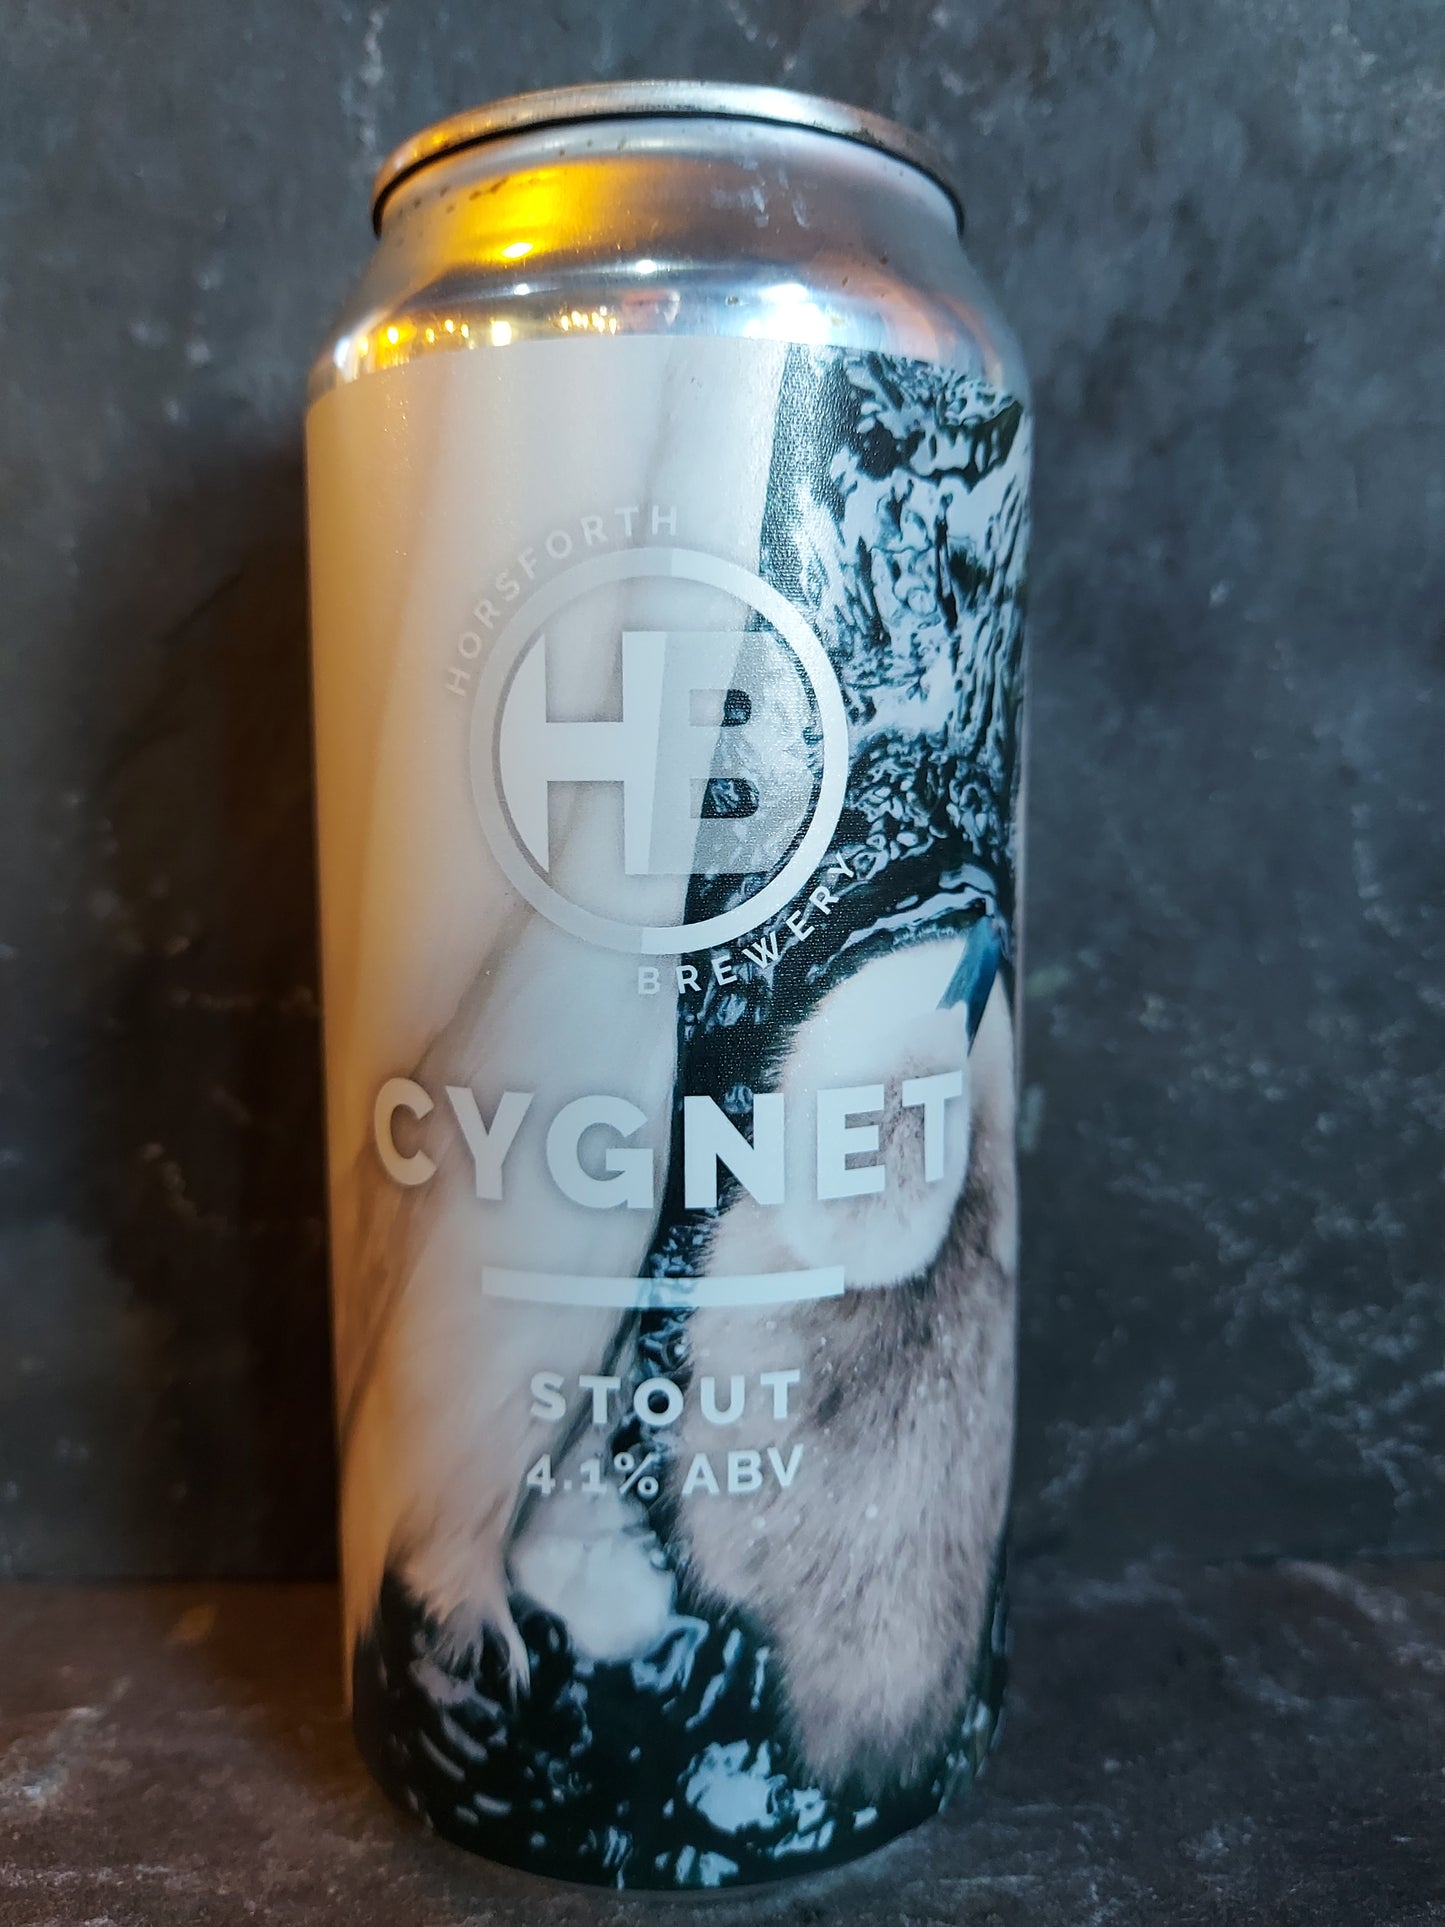 Cygnet - Horsforth